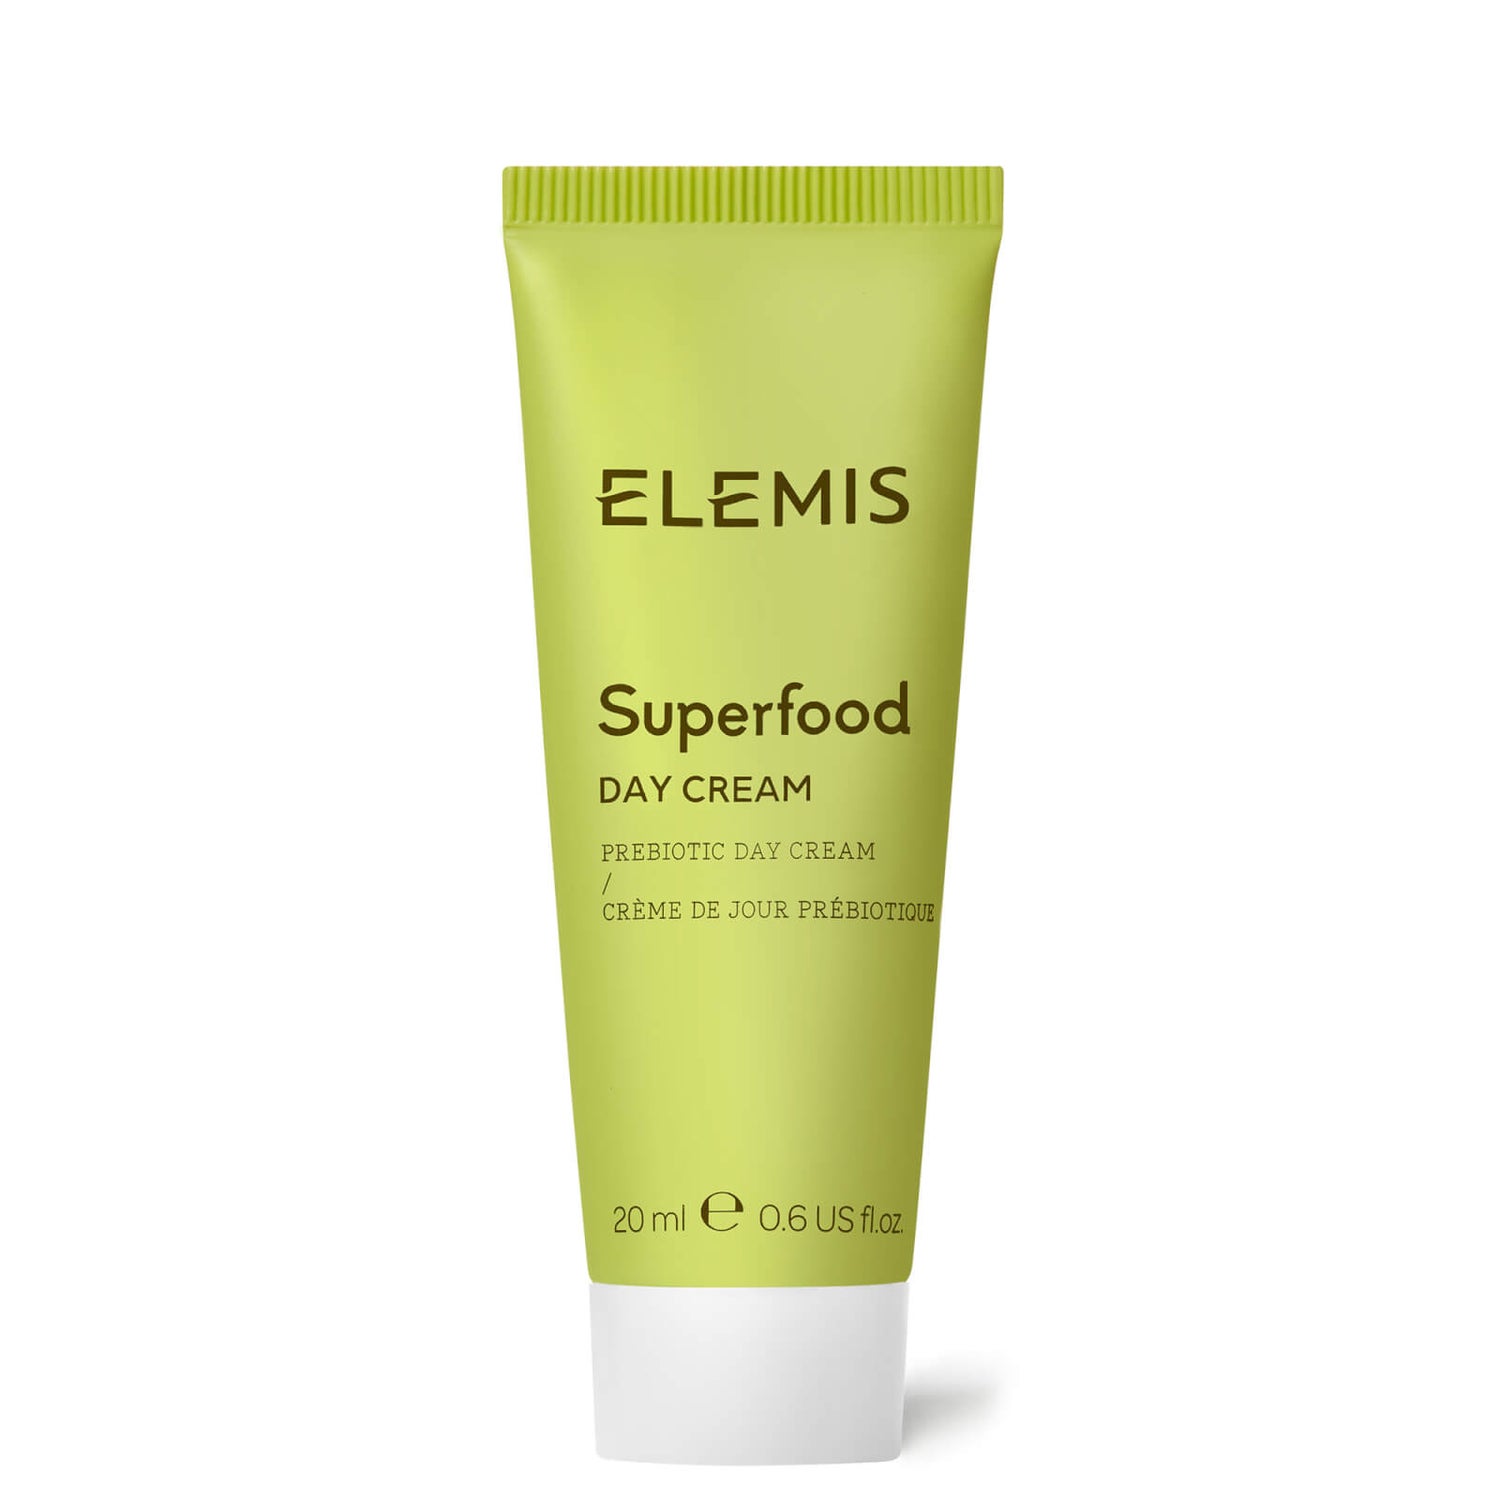 Elemis Superfood Day Cream 20ml